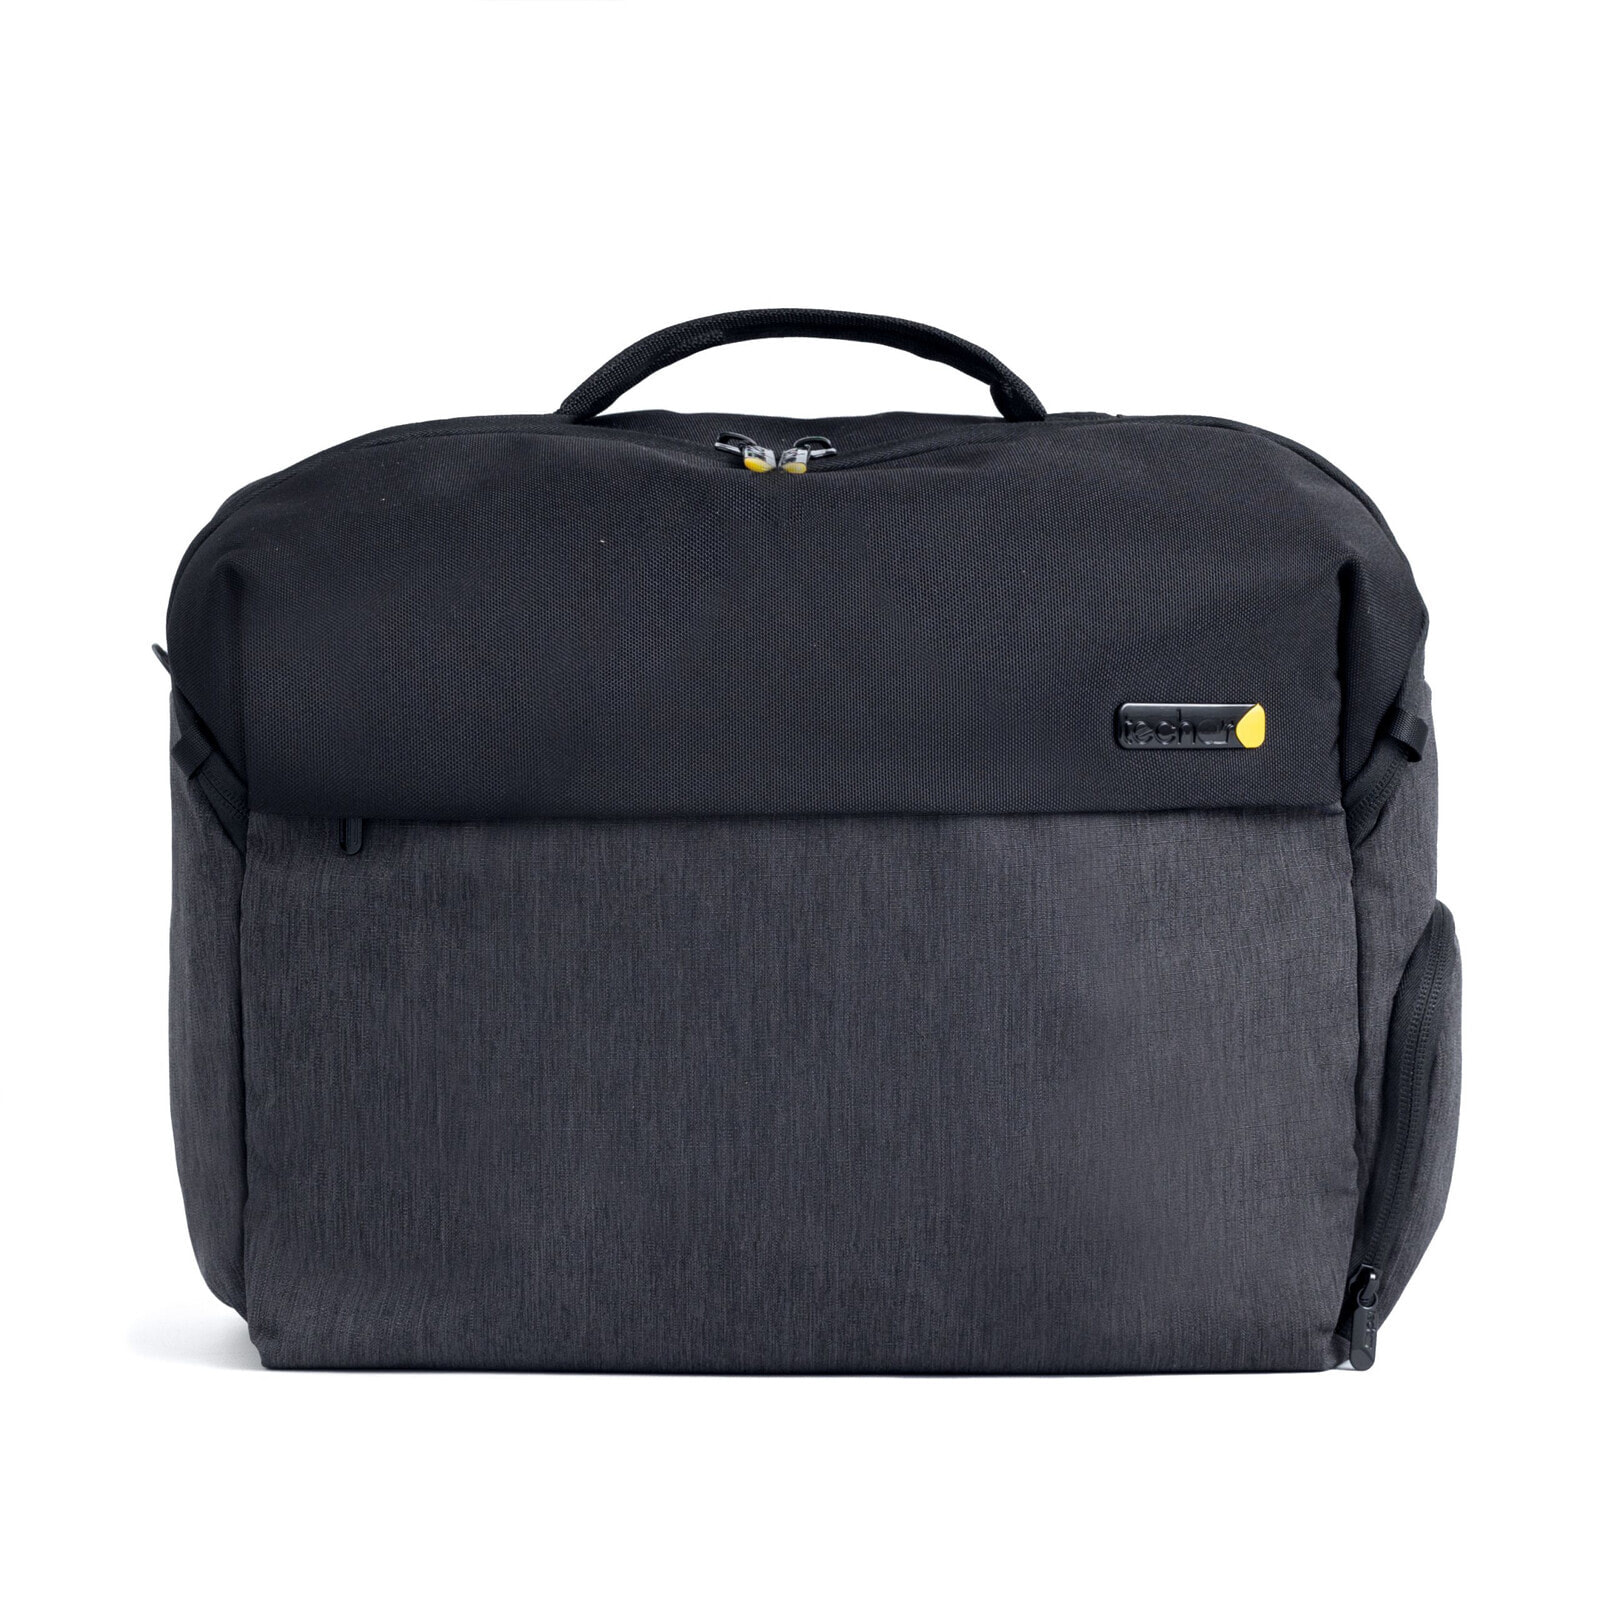 techair Commuter 14-15.6 Messenger bag in Black